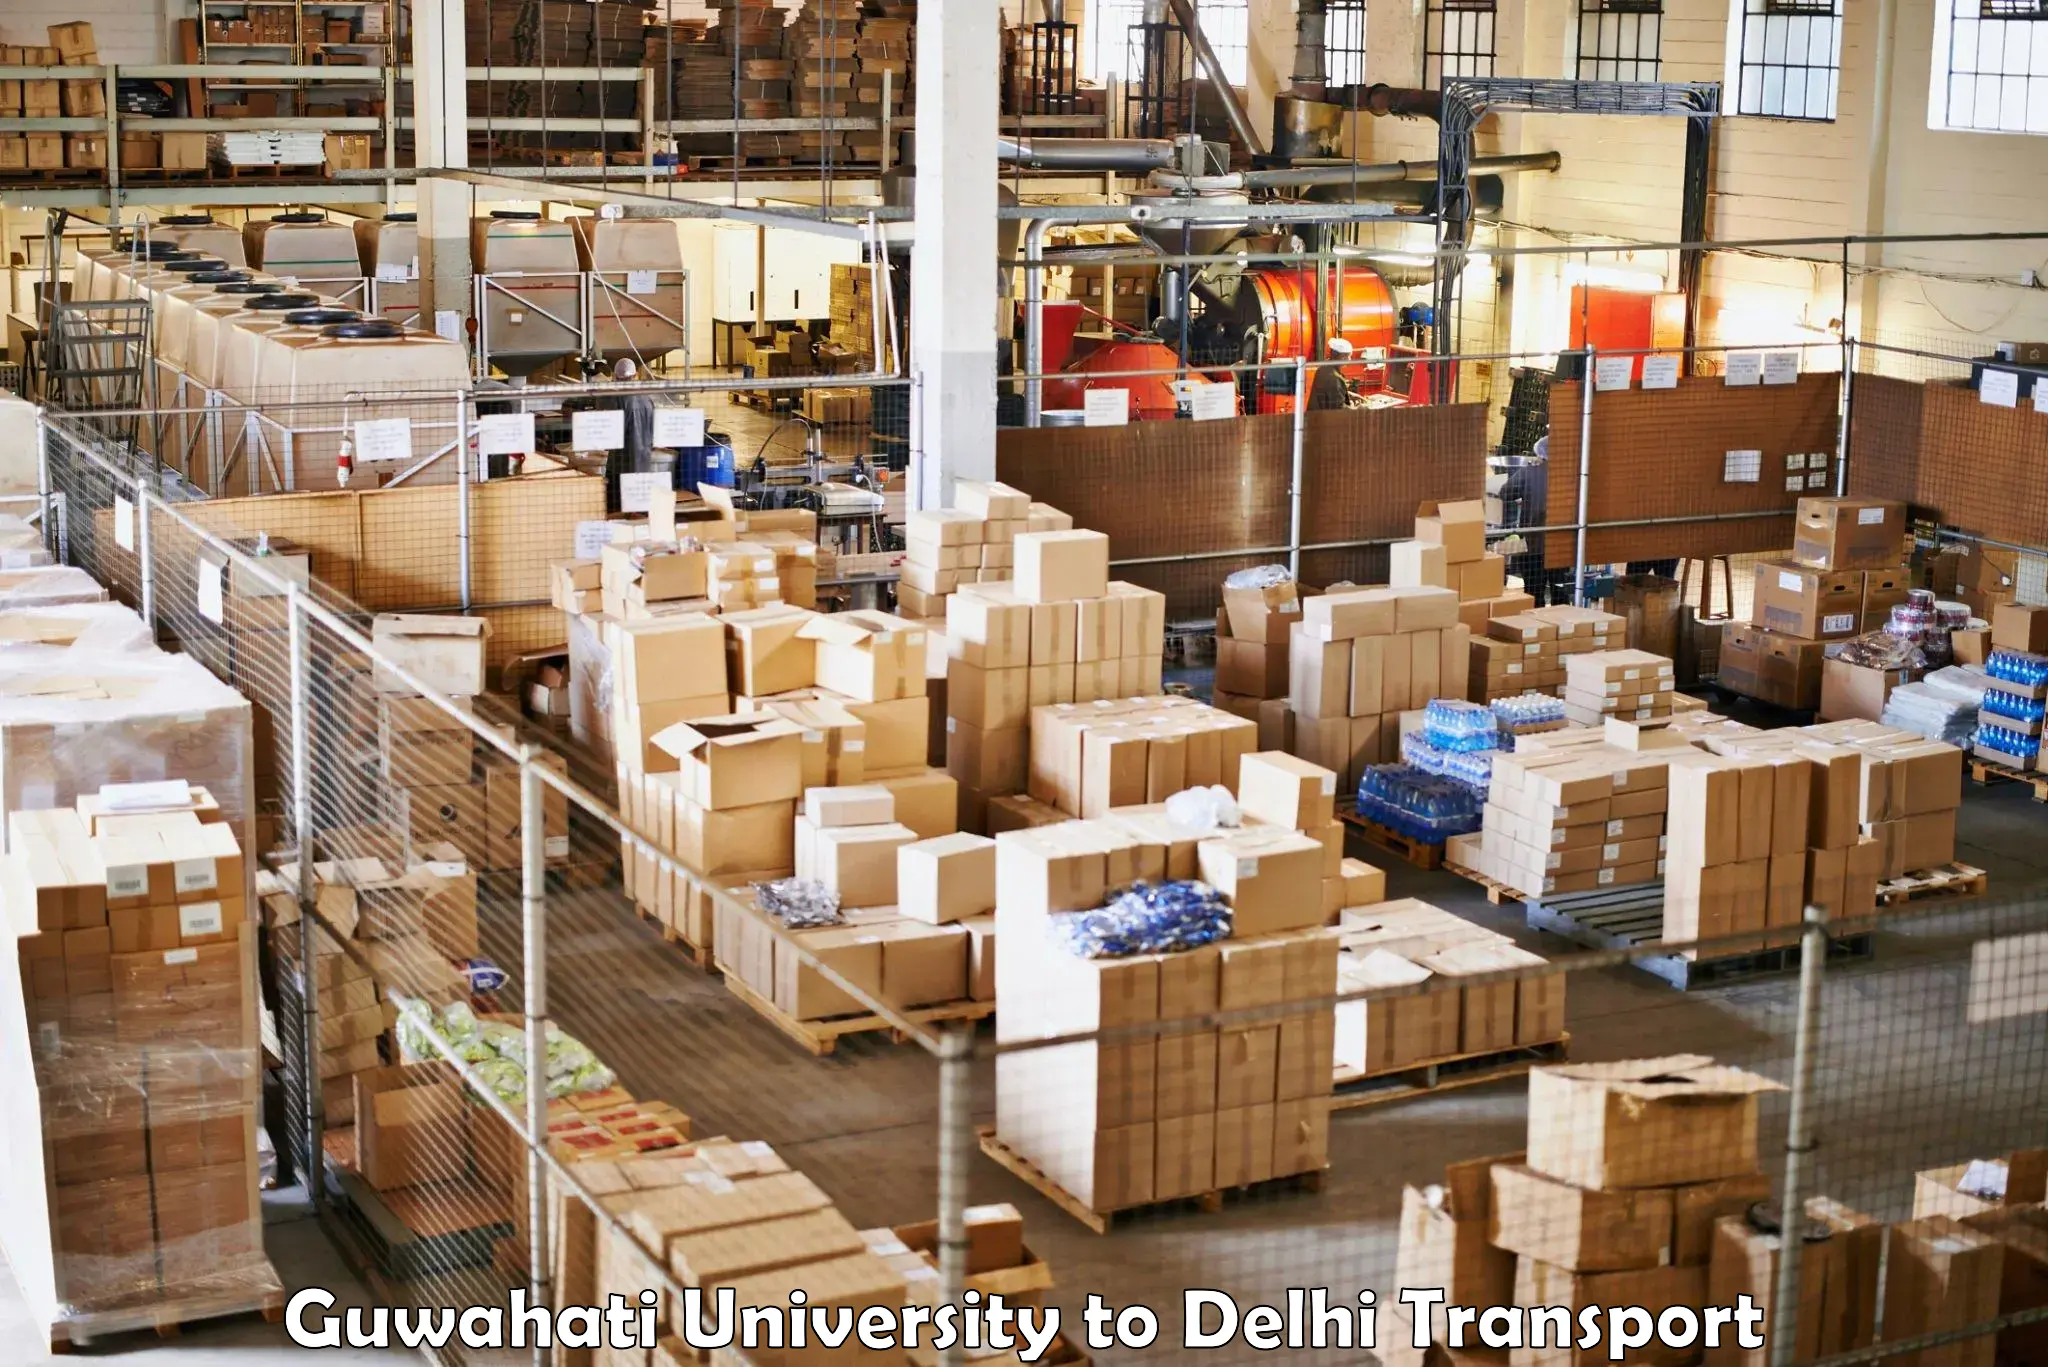 Furniture transport service Guwahati University to Delhi Technological University DTU